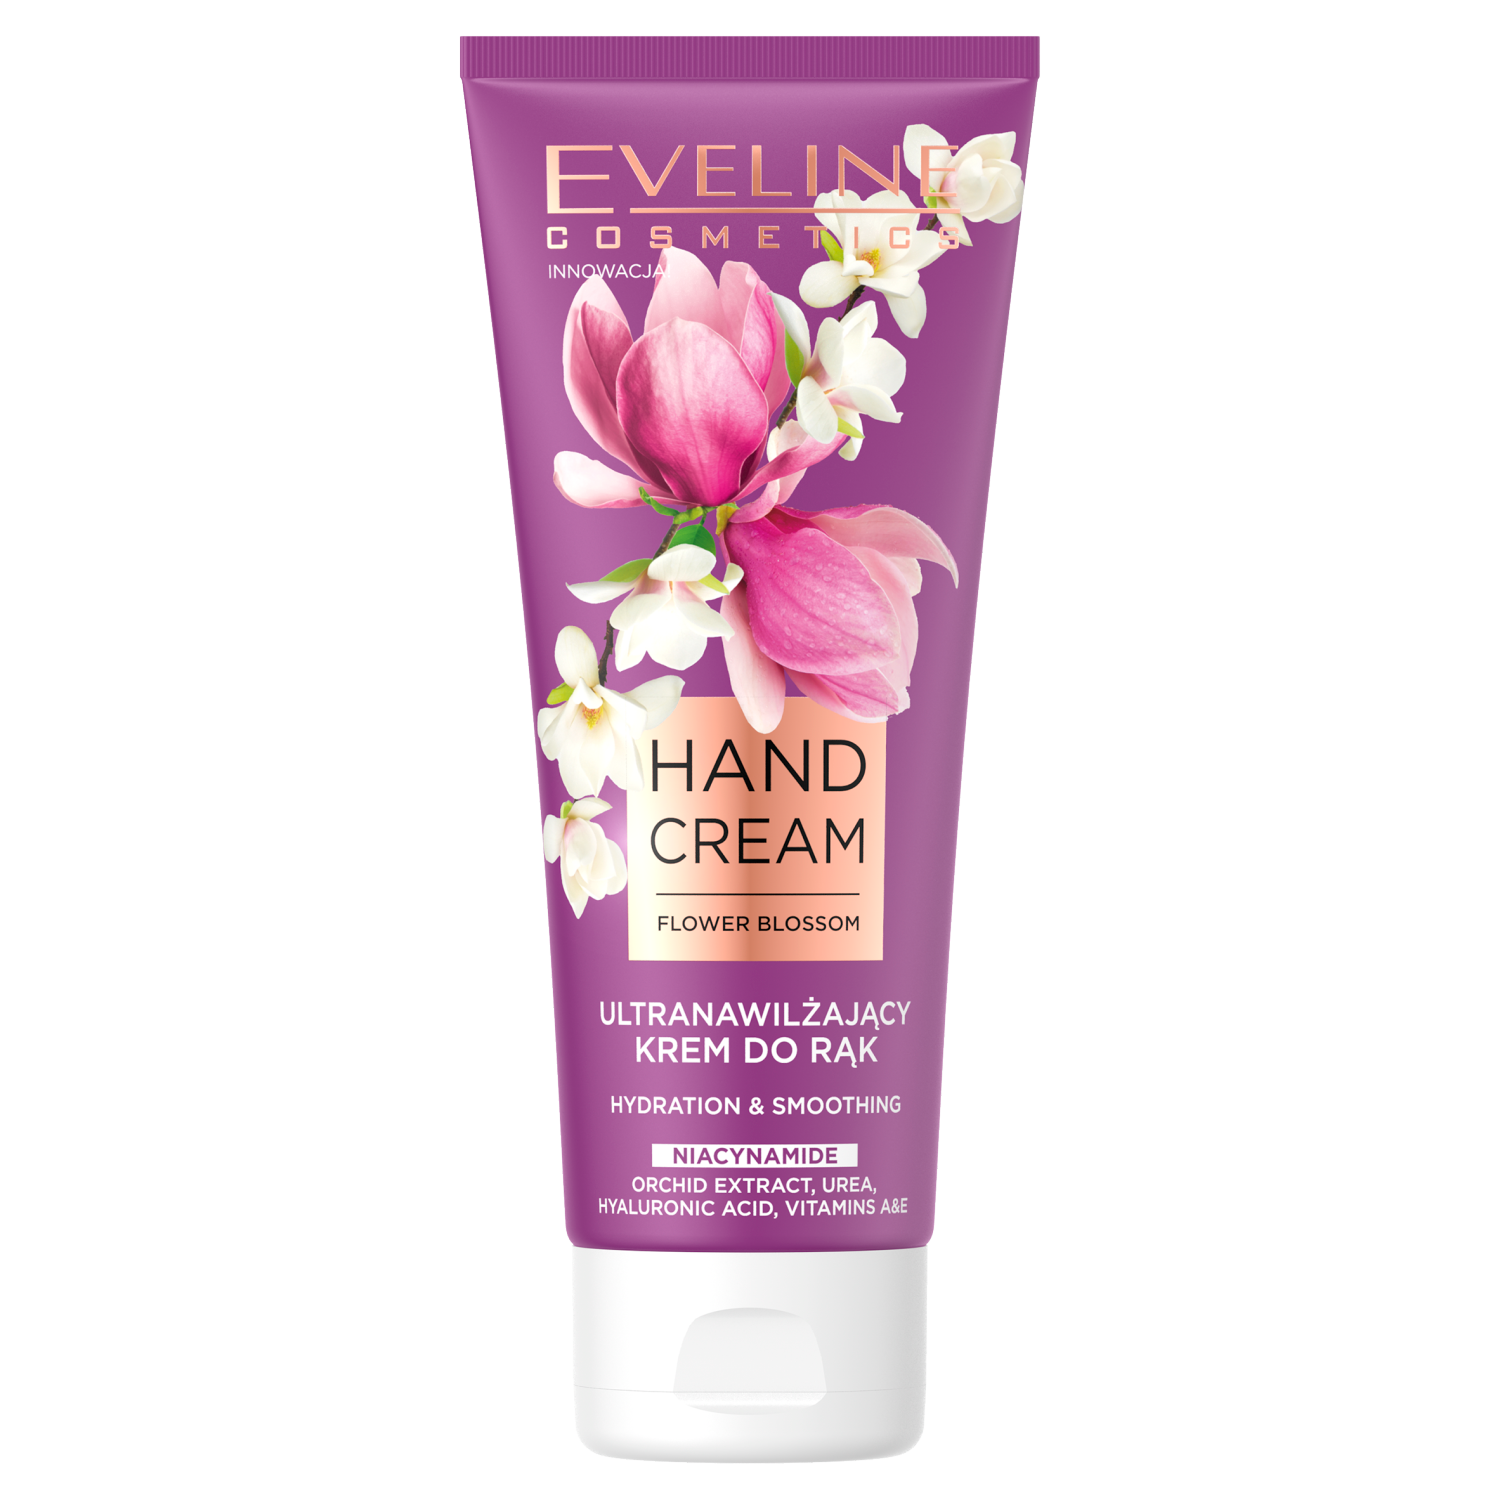 Eveline Cosmetics ультраувлажняющий крем для рук, 75 мл